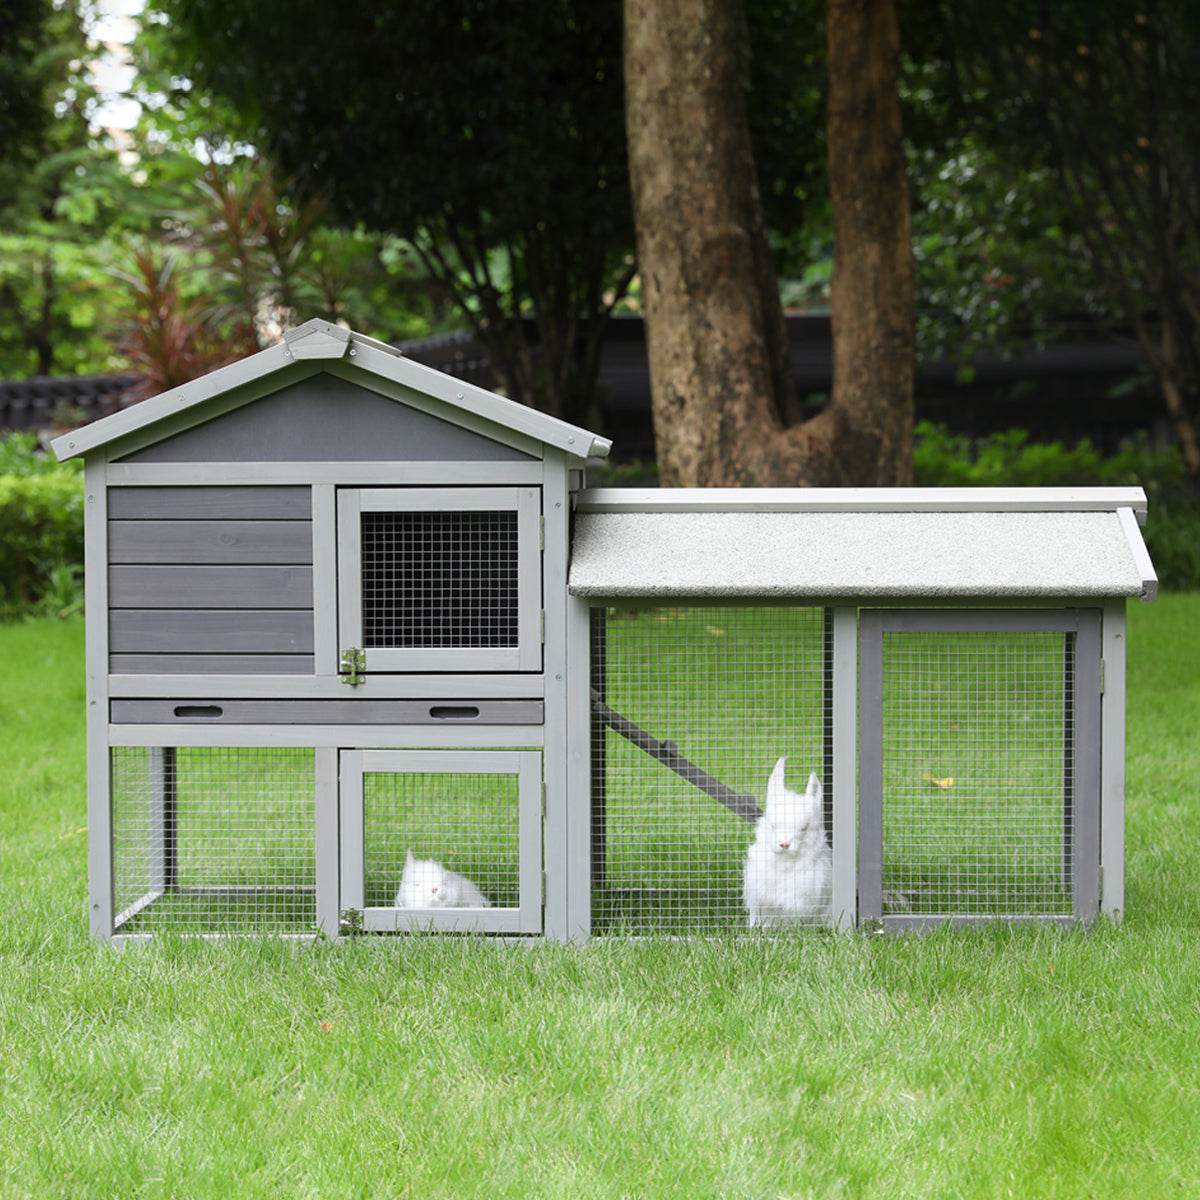 Wooden Chicken Coop Large Wooden Outdoor Bunny Rabbit Hutch Hen Cage with Ventilation Door, Removable Tray & Ramp Garden Backyard Pet House